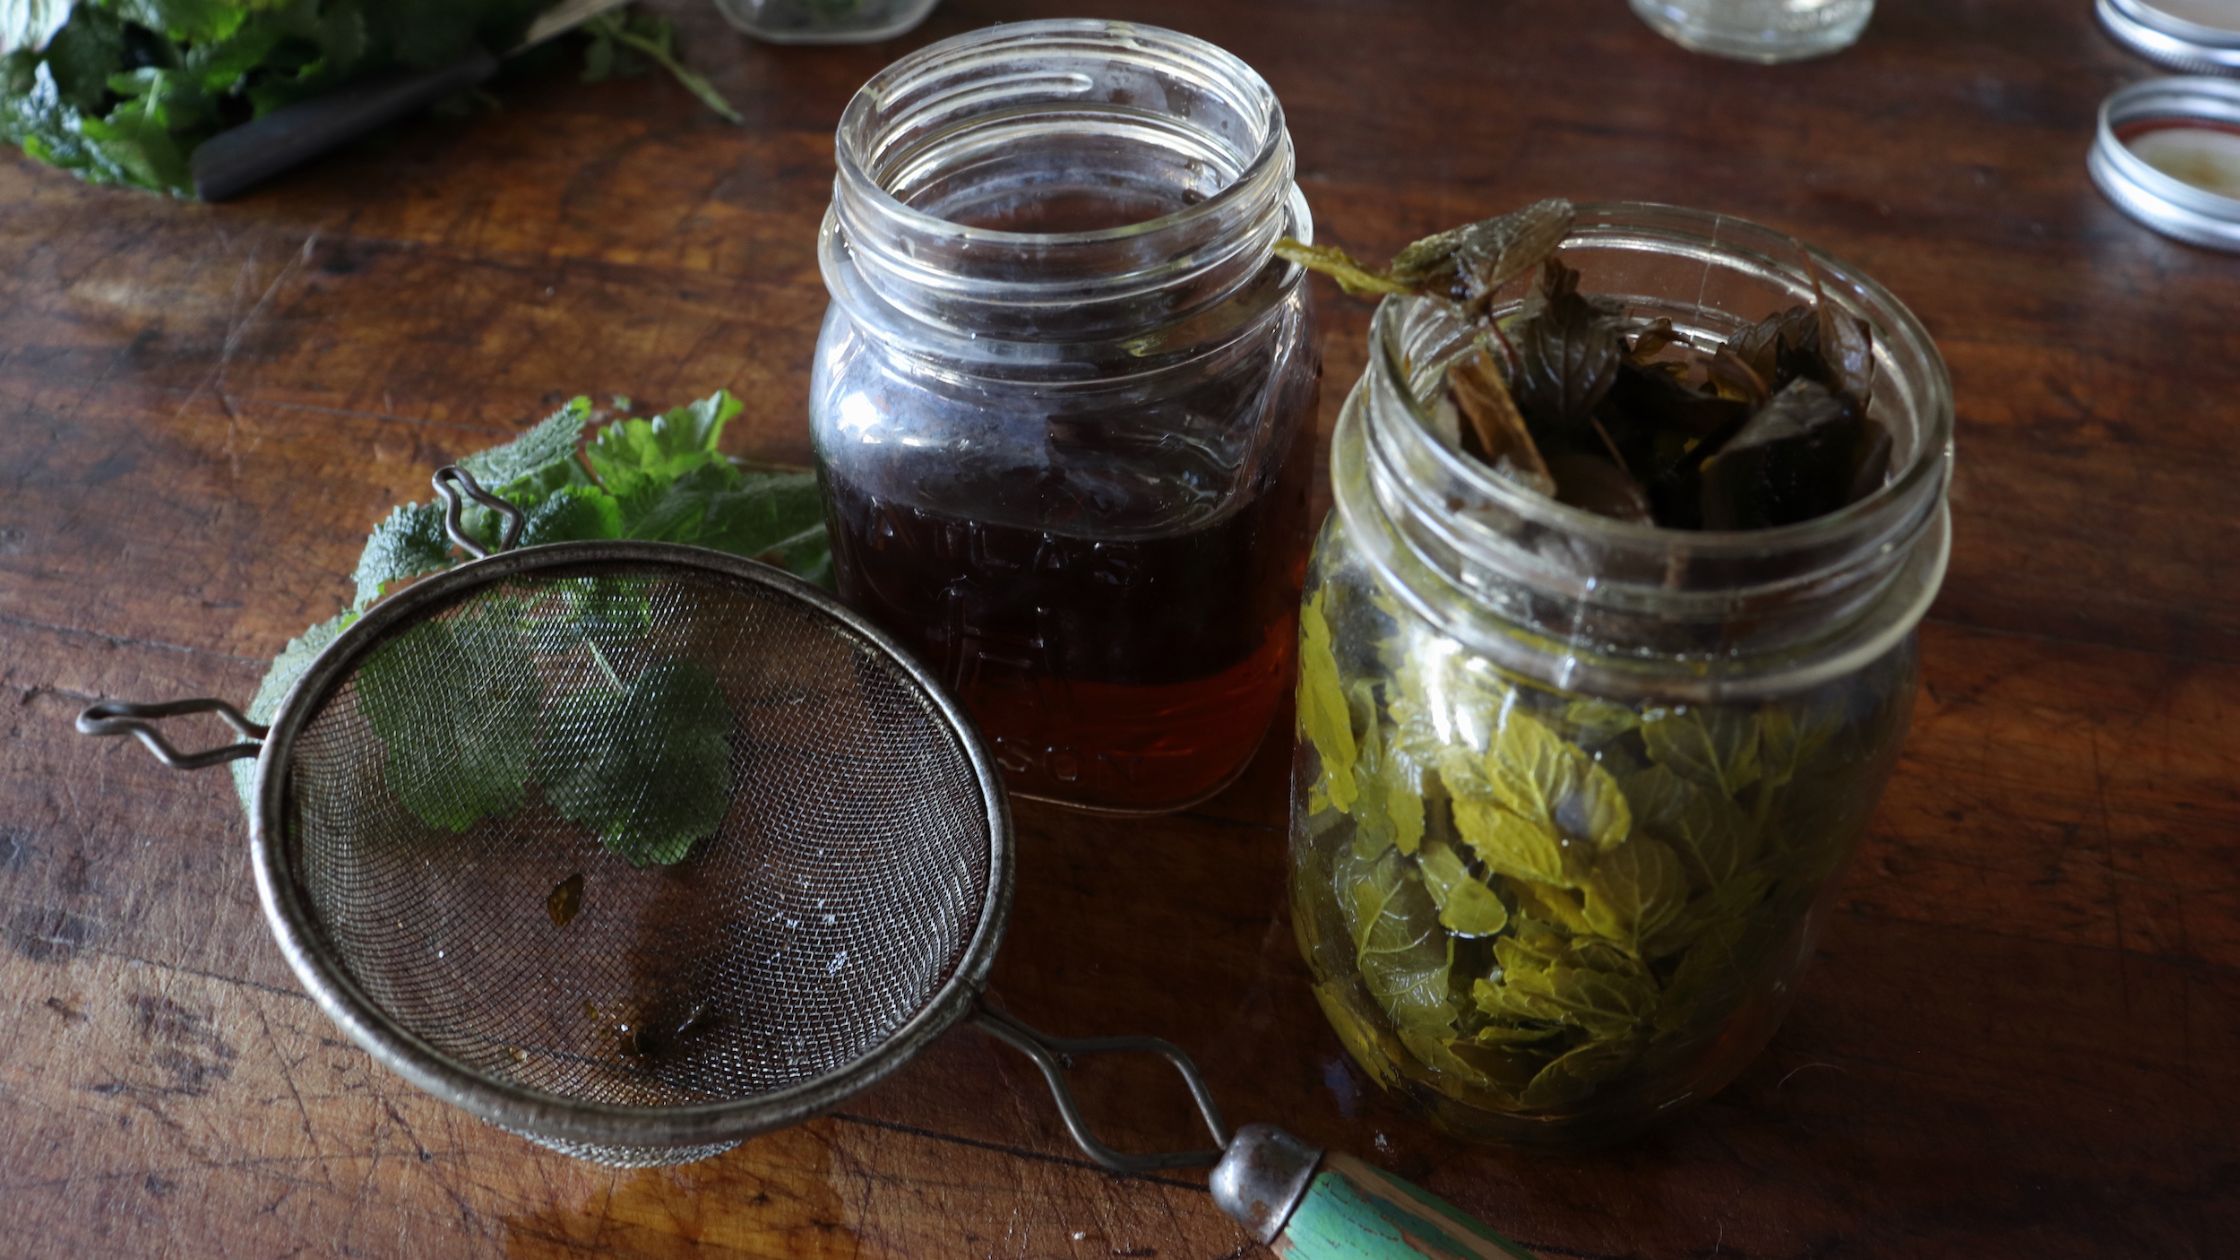 Strainer, tincture in mason jar, mason jar with herbs, lemon balm leaves